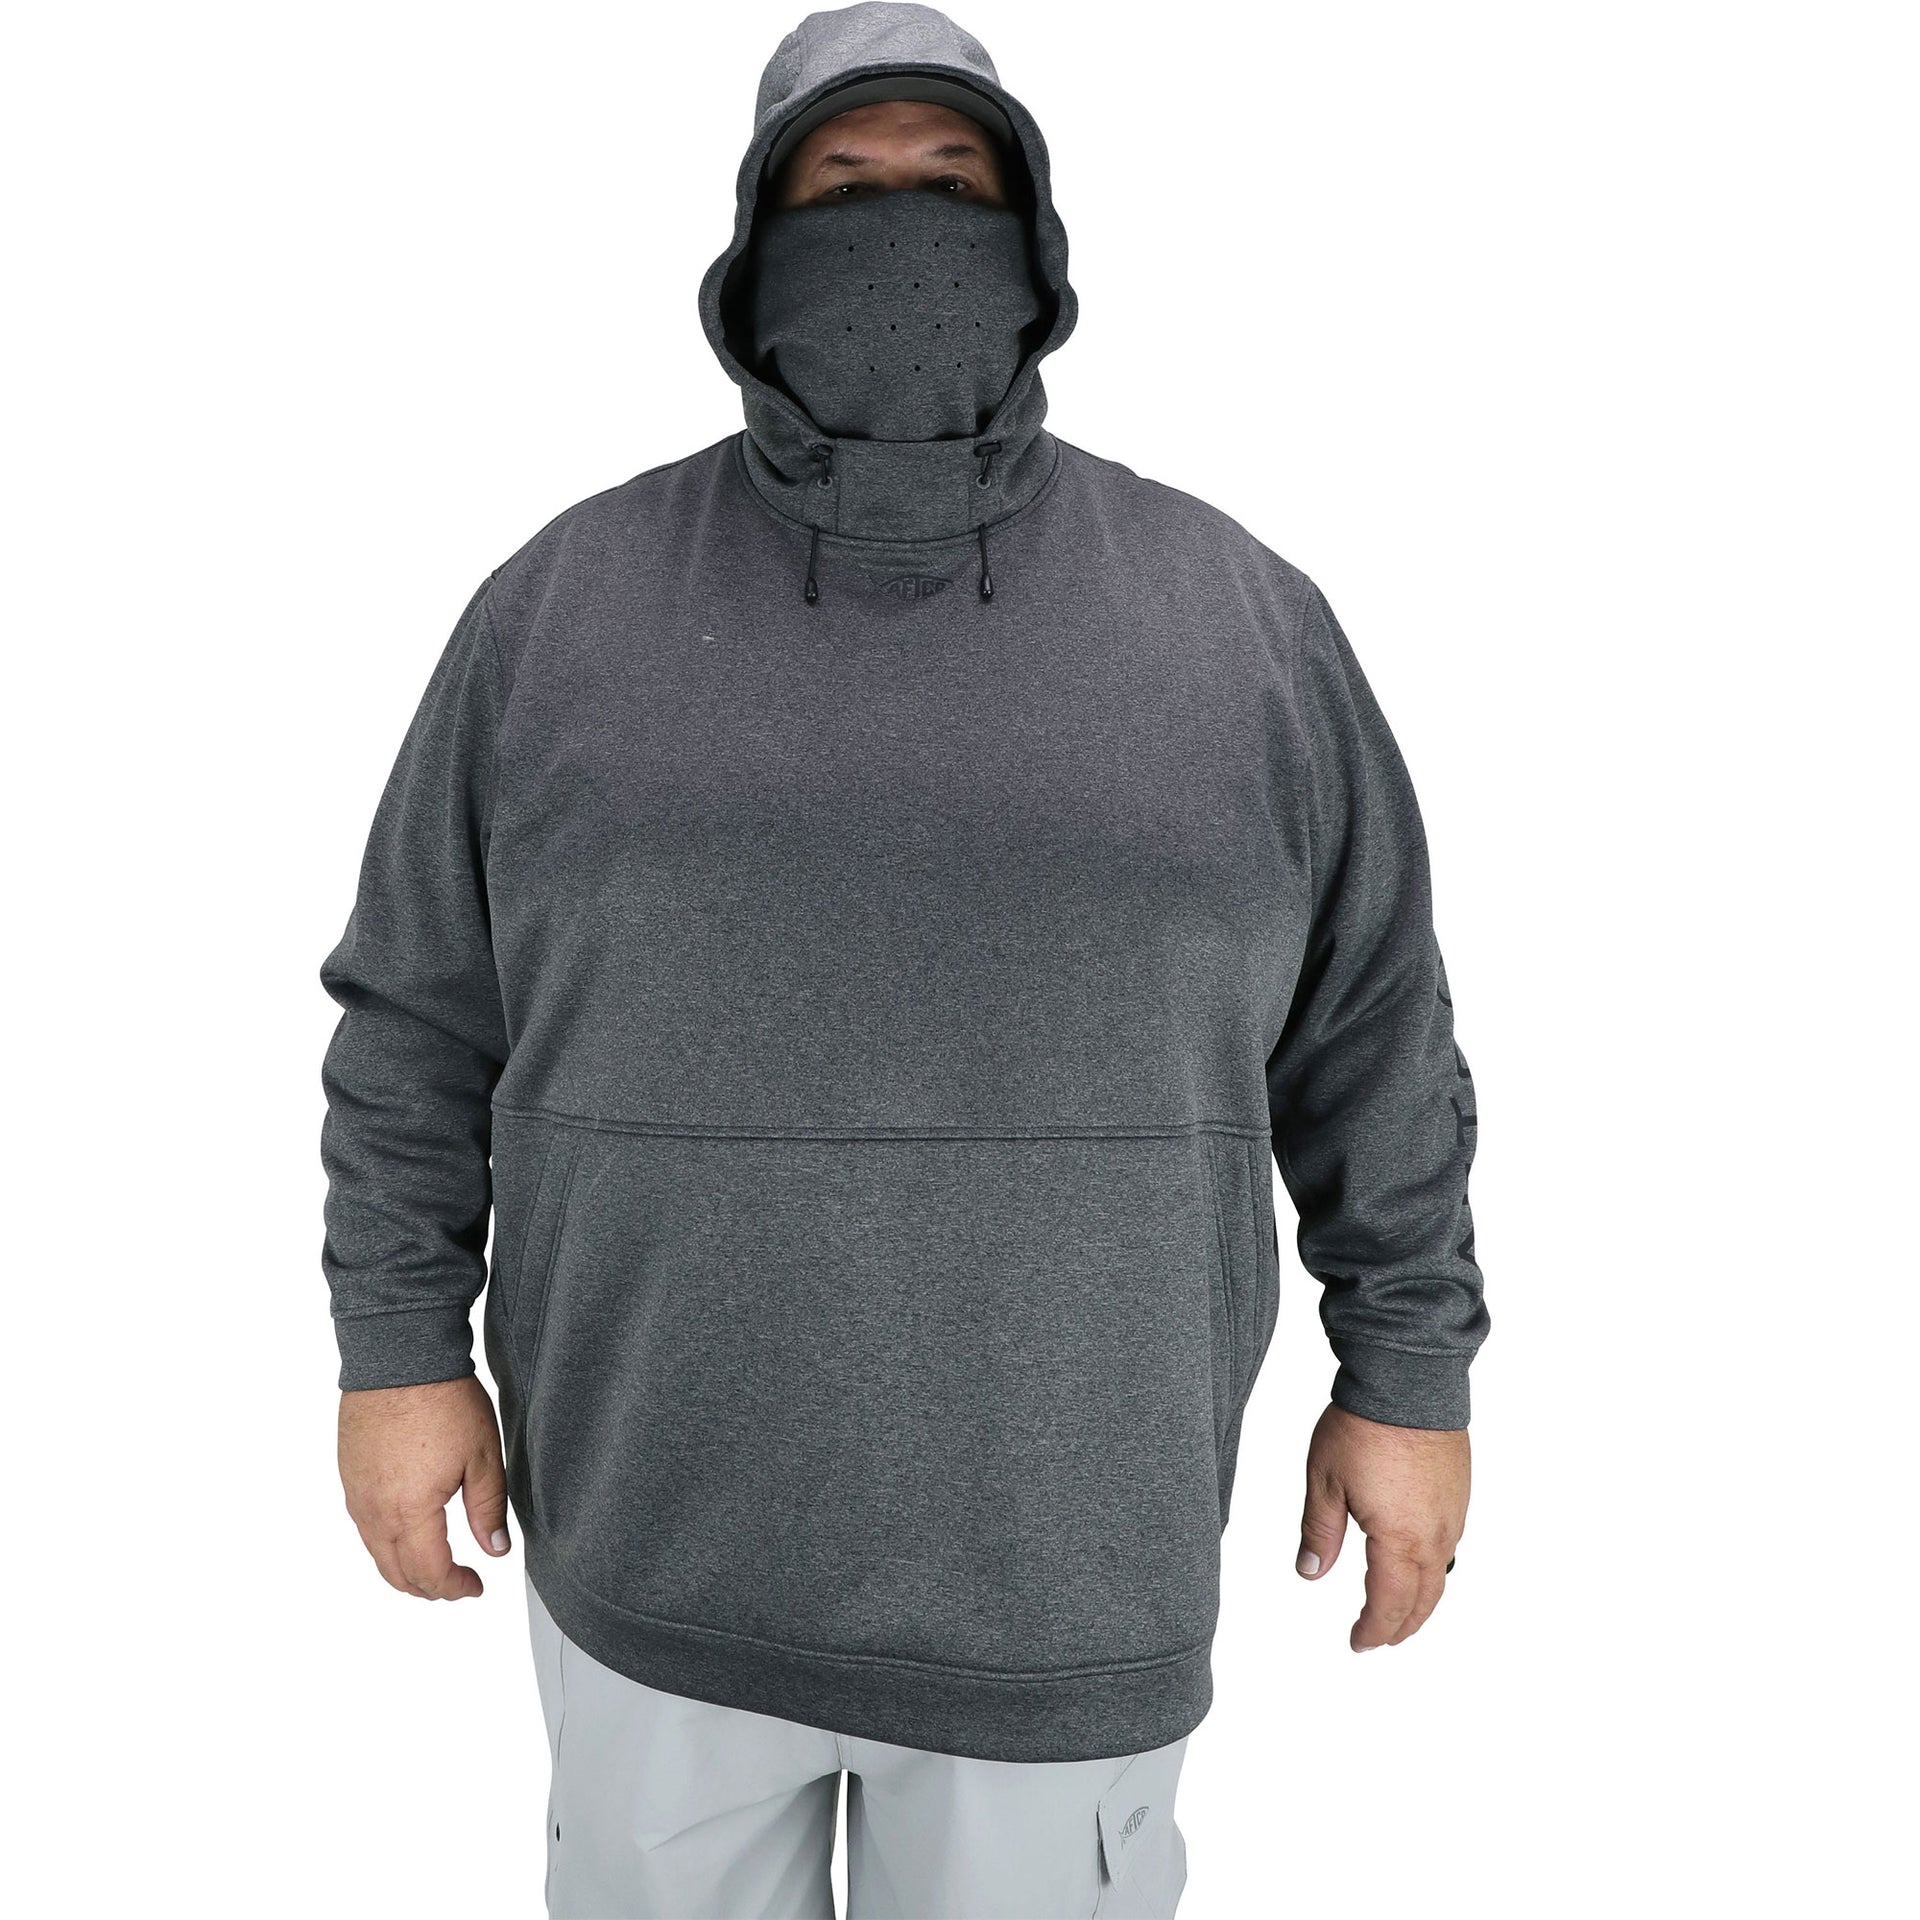 AFTCO Big Guy Reaper Technical Sweatshirt - Charcoal Heather - 4X